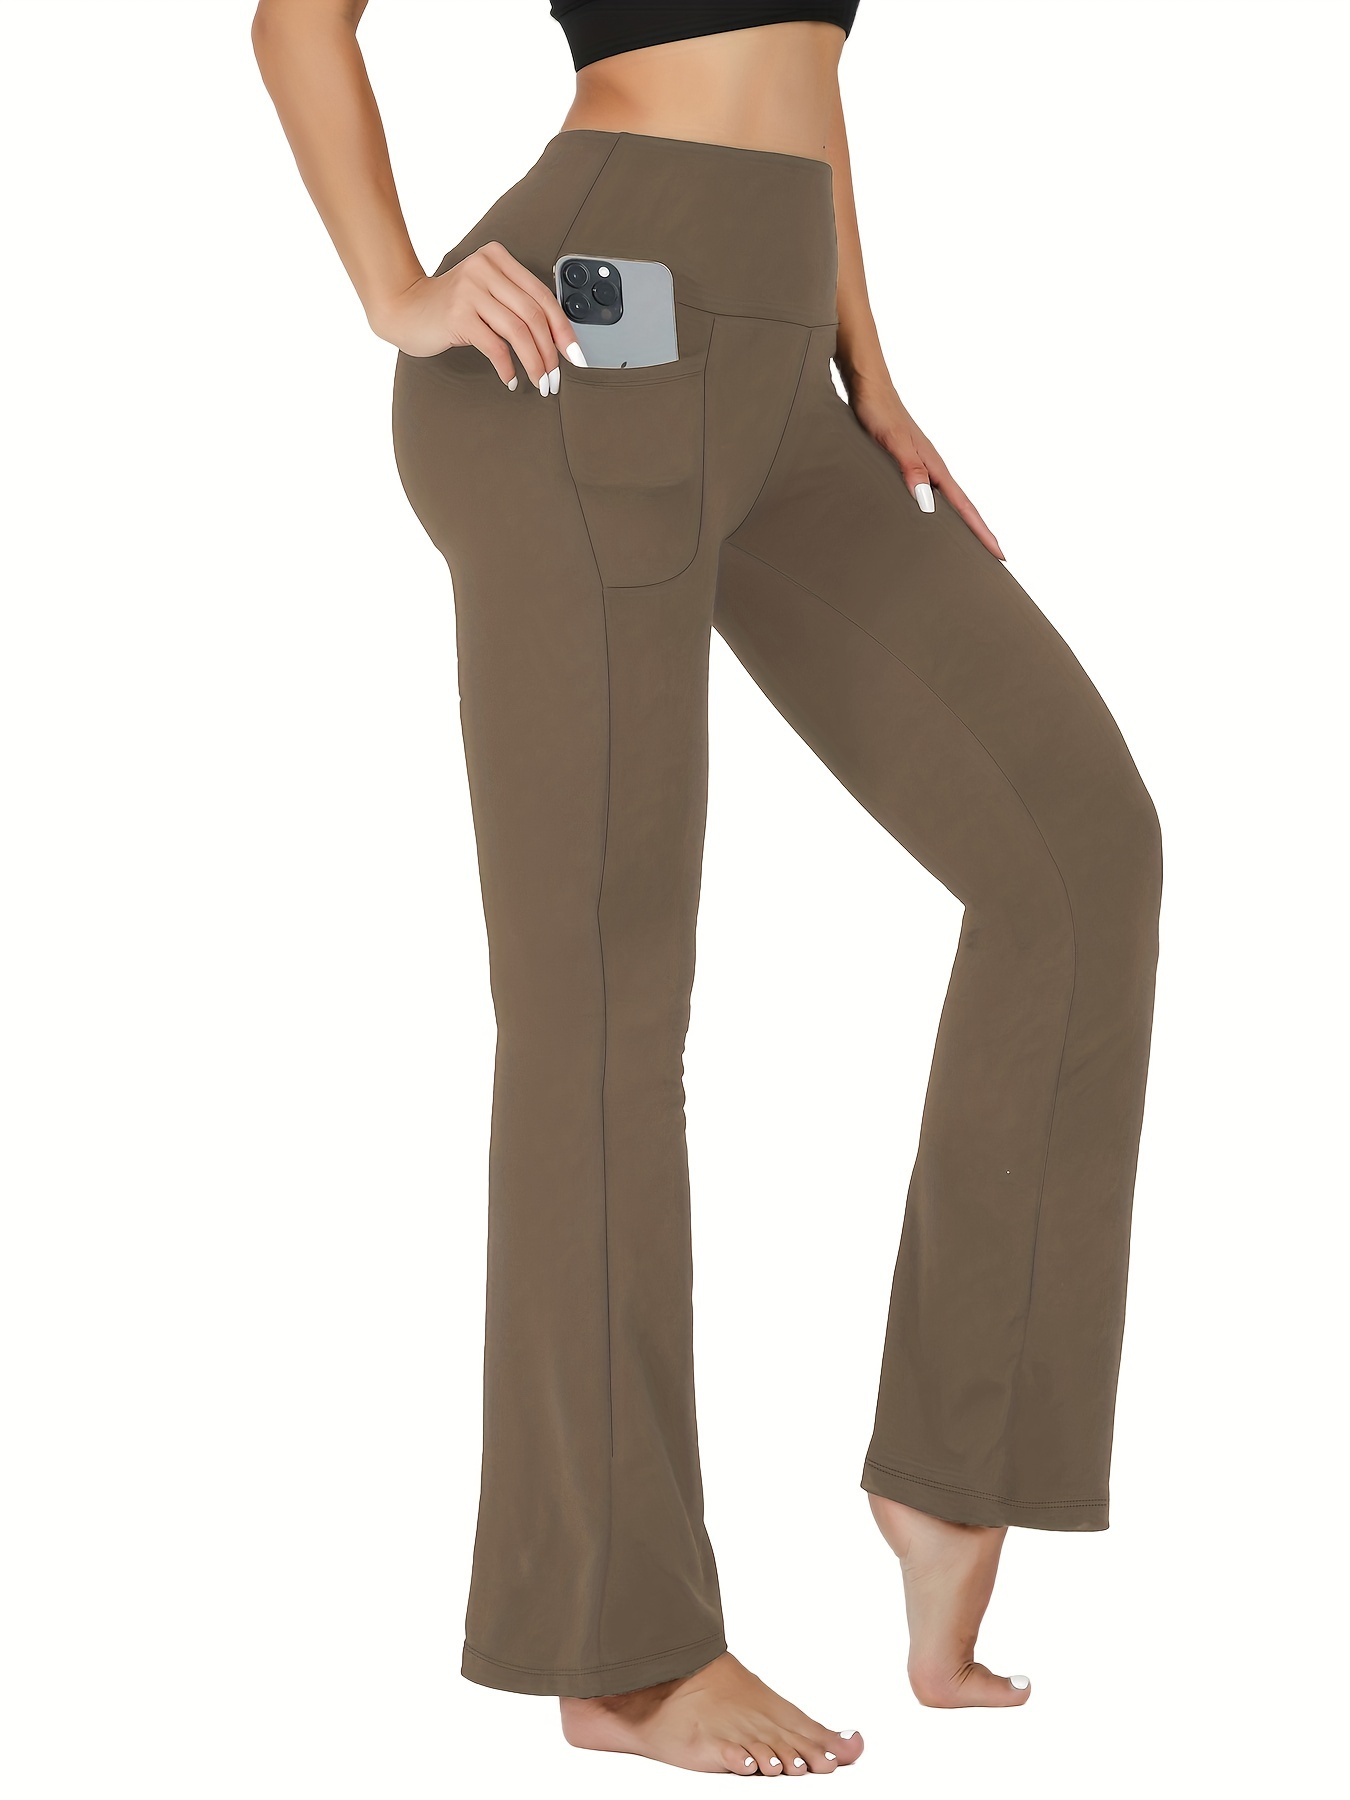 AFITNE Women's Bootcut Yoga Pants with Pockets High Waist Size Medium New